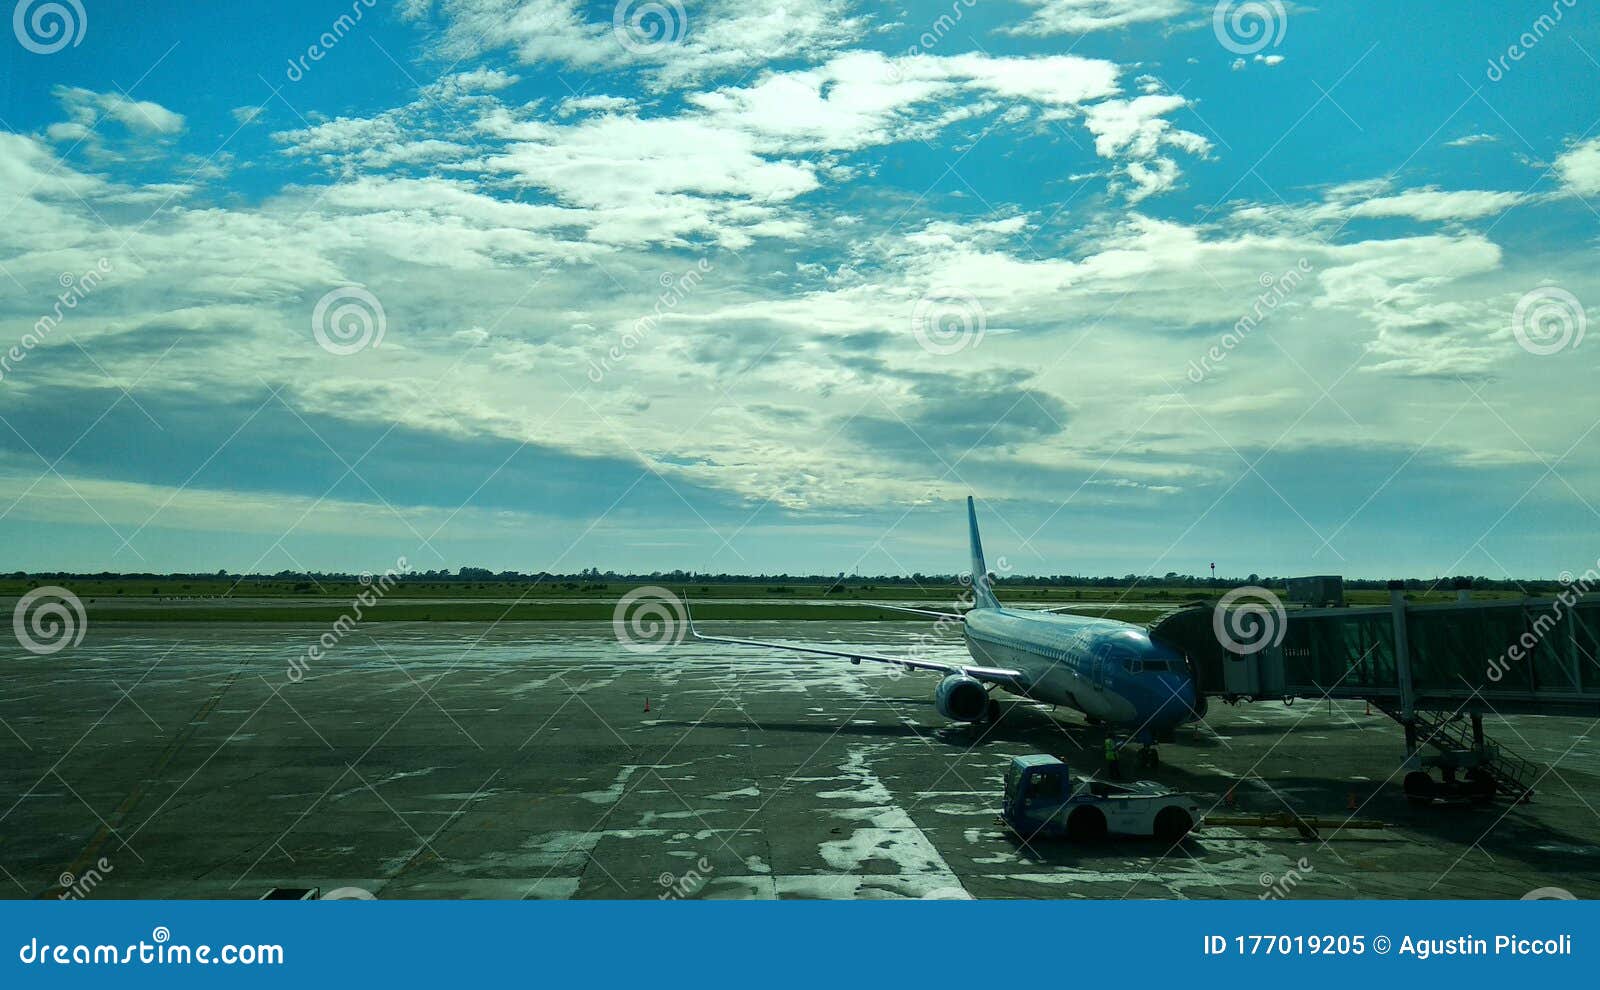 argentina, buenos aires, airport, plane,